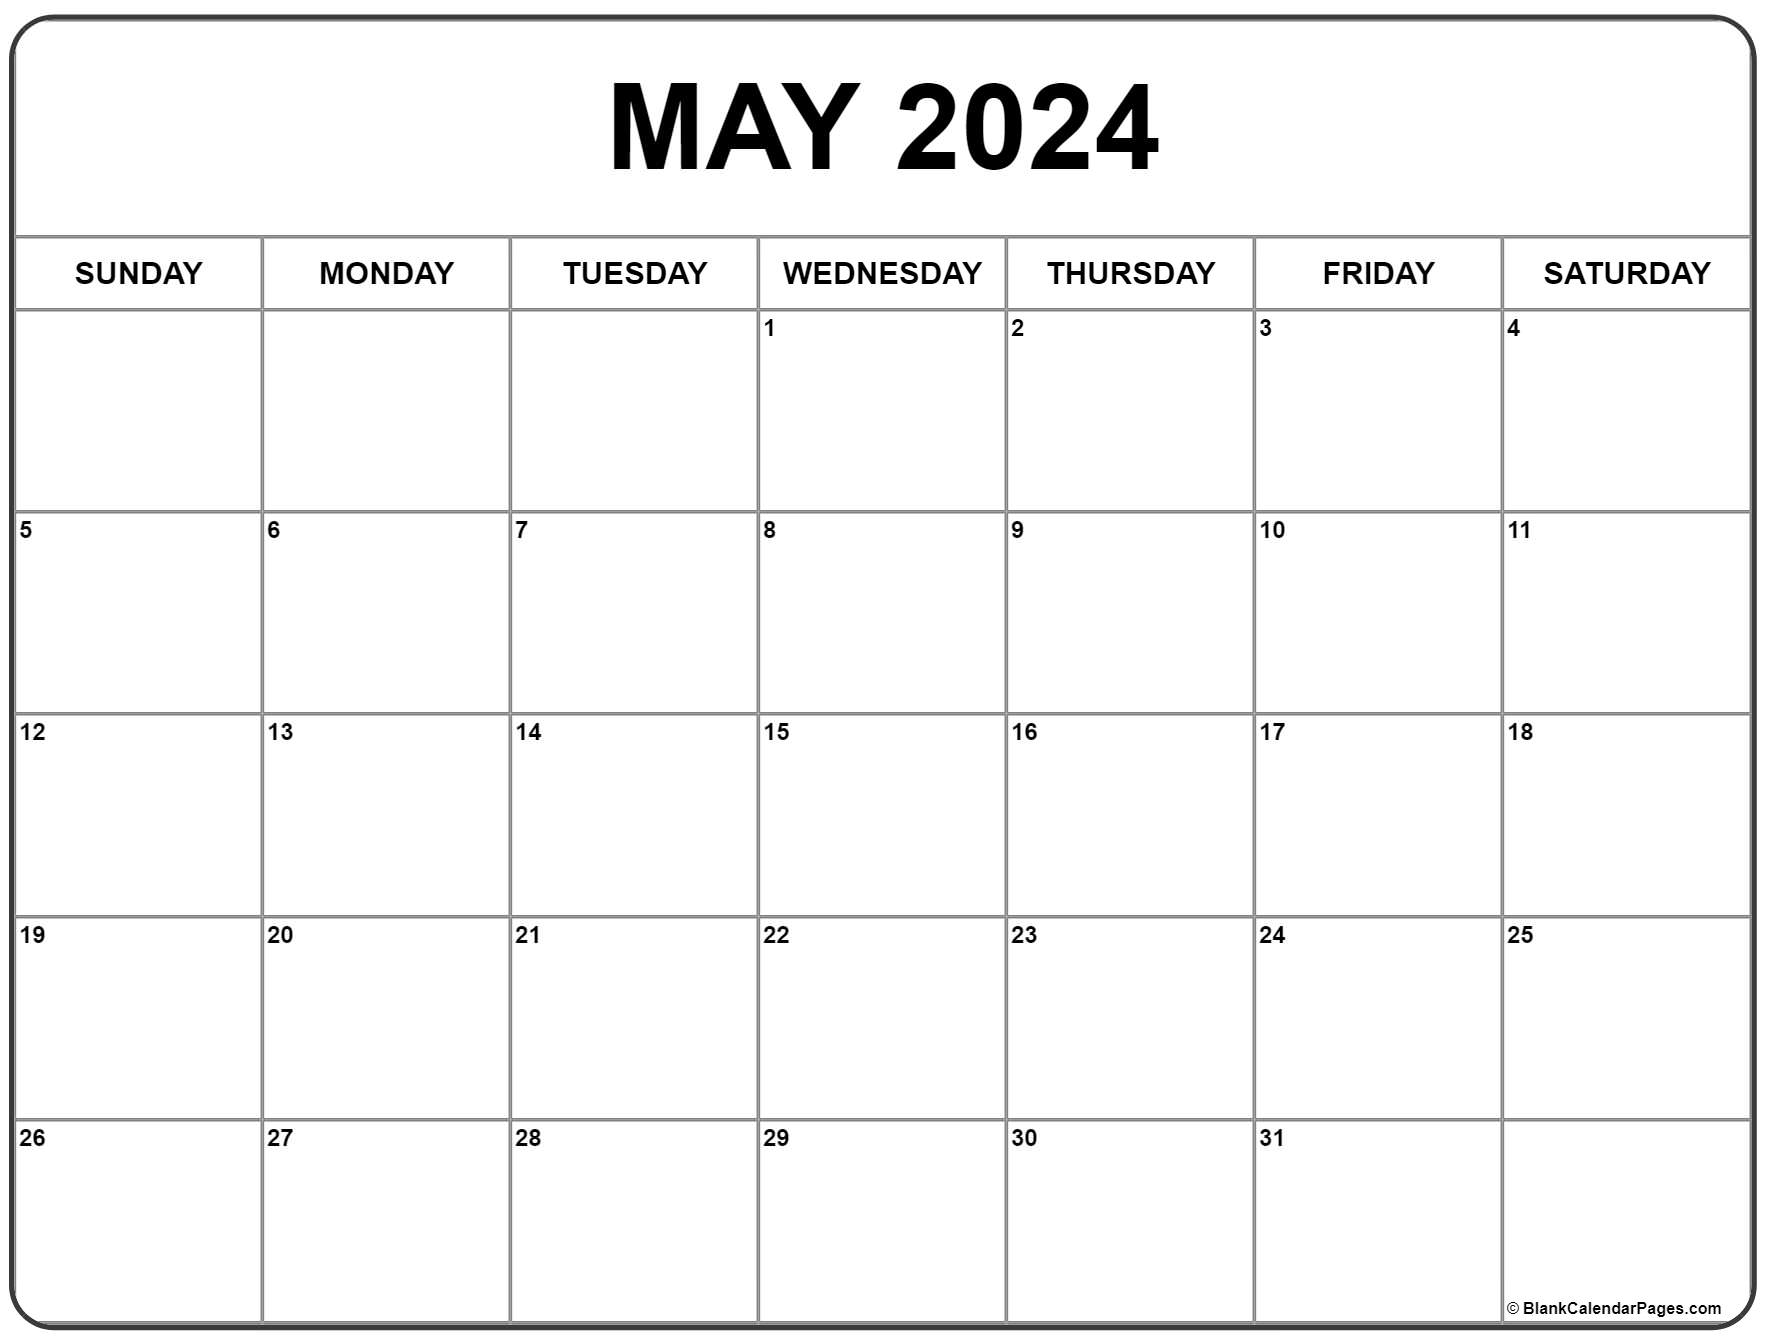 May 2024 Calendar | Free Printable Calendar for Free Printable Calendar 2024 May